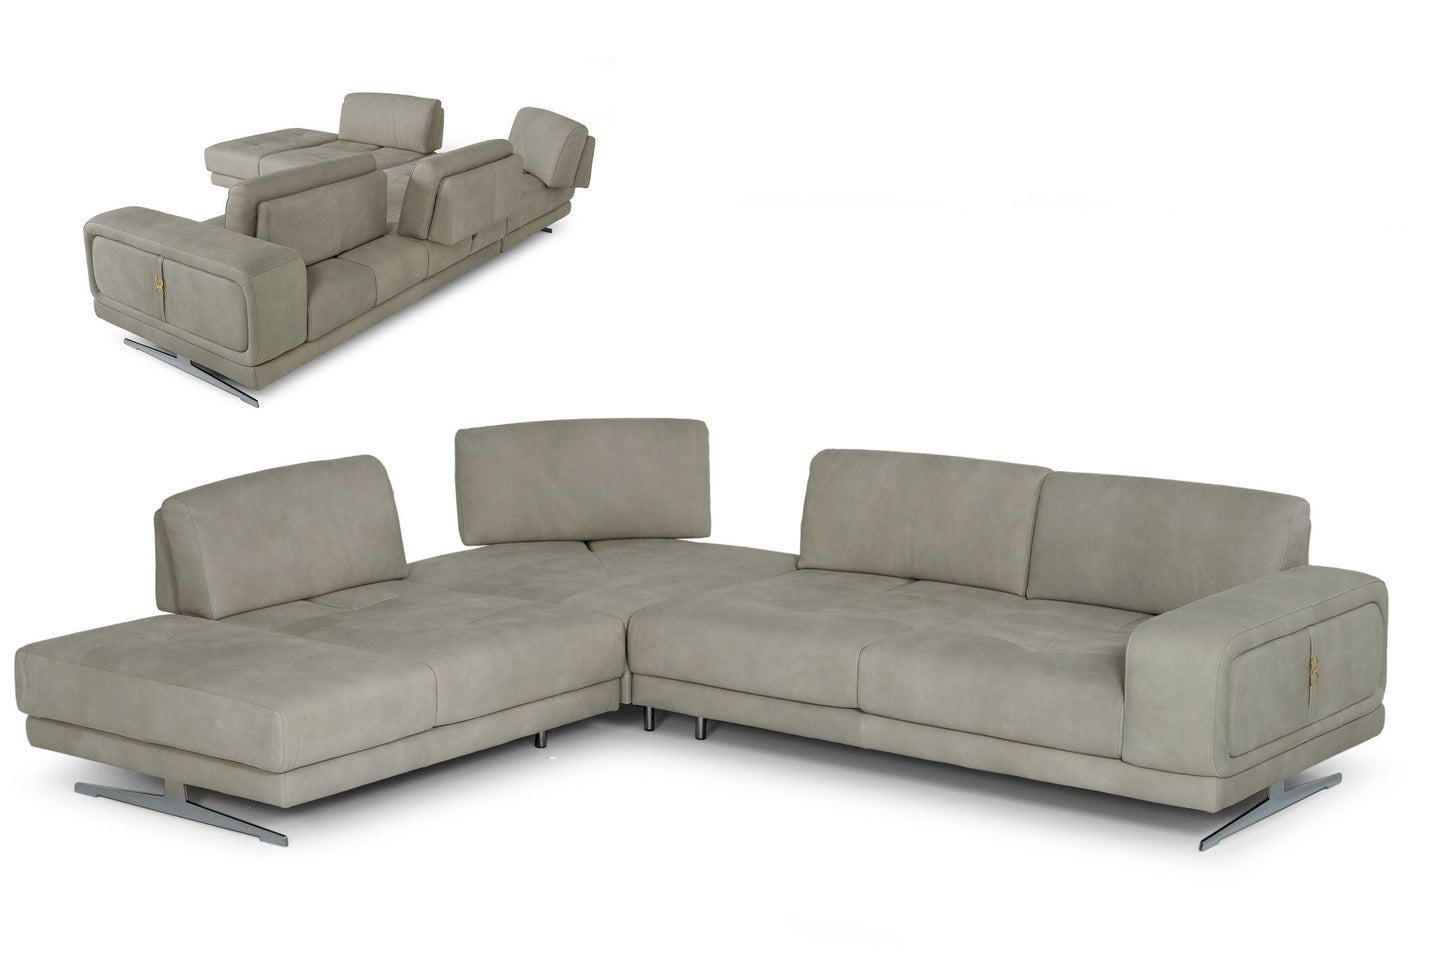 Coronelli Collezioni Mood - Italian Grey Leather Left Facing Sectional Sofa